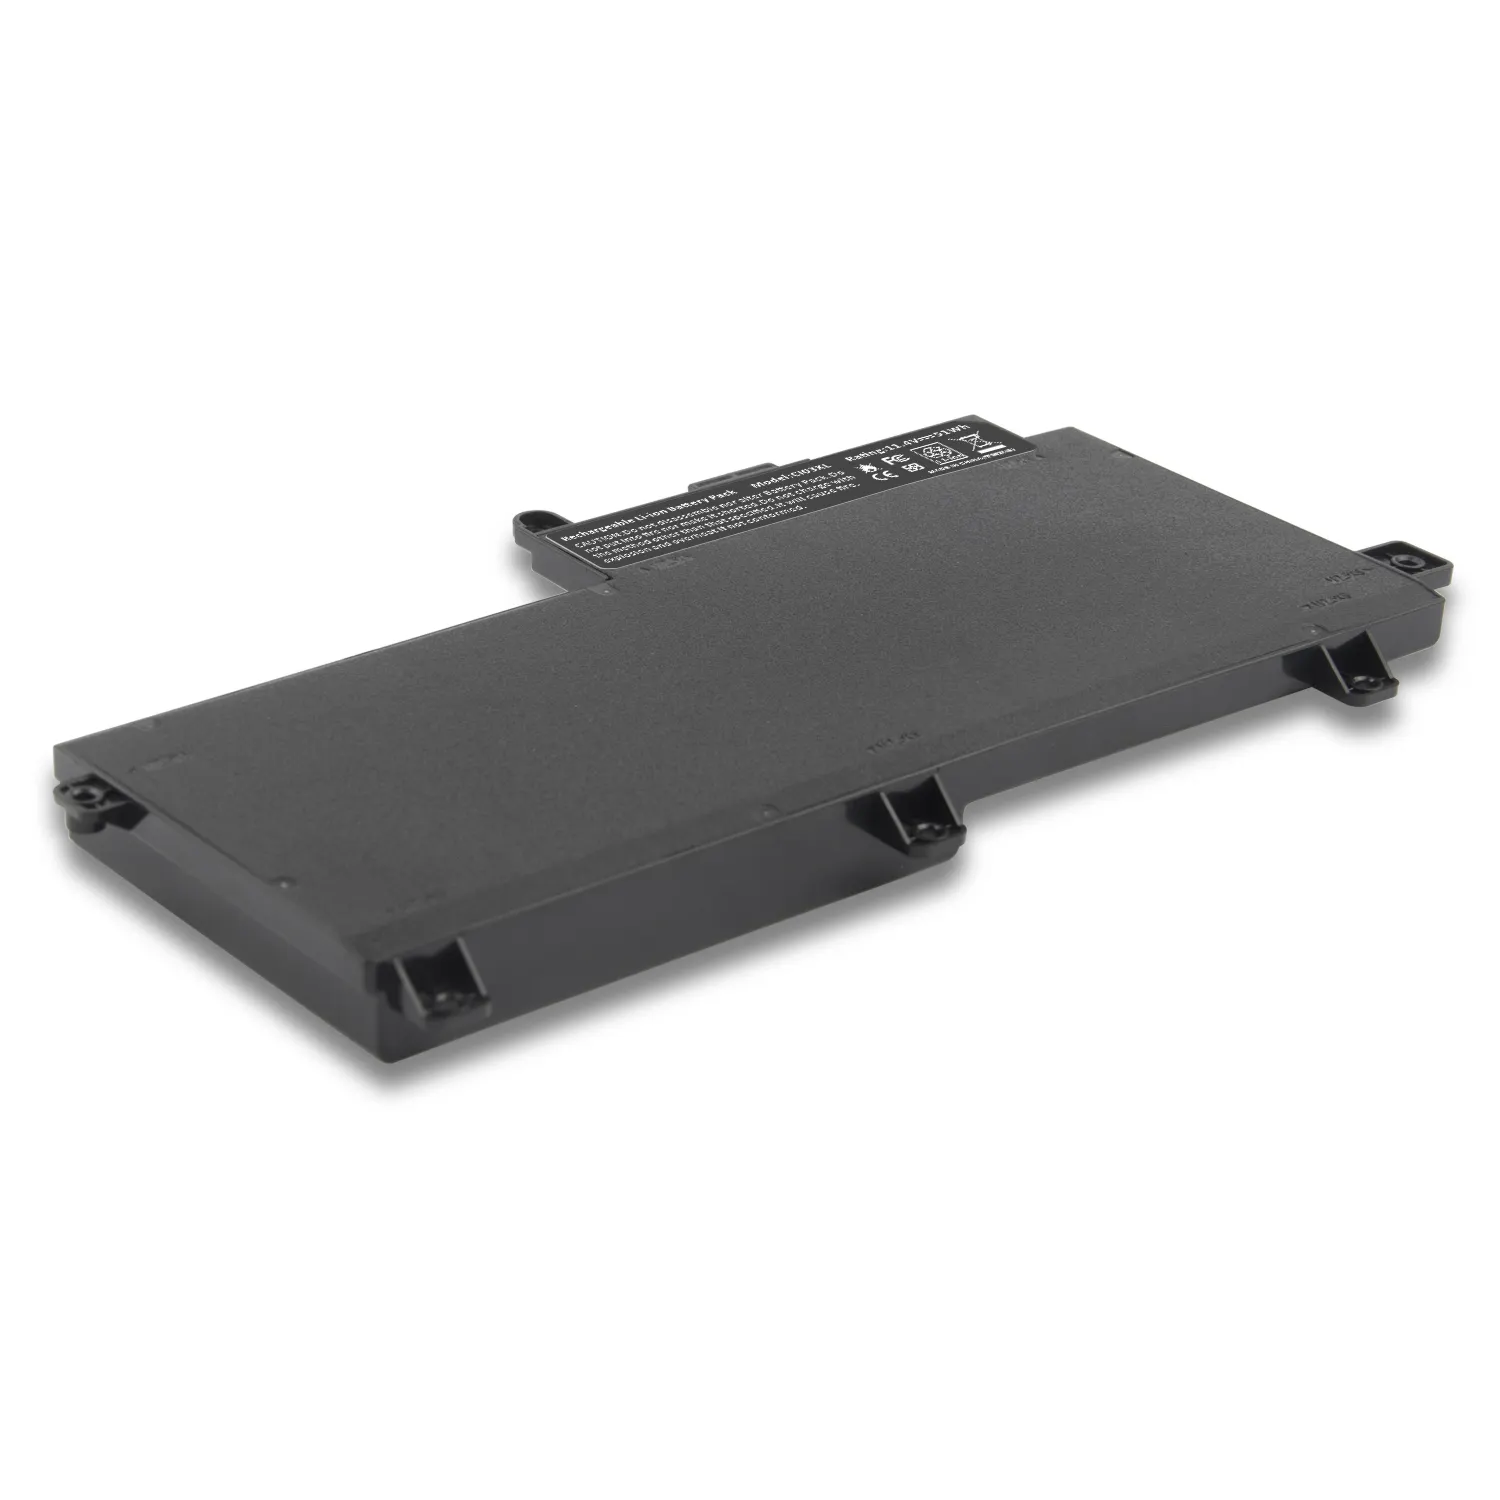 Laptop Battery For HP 11.4V 51Wh CI03XL ProBook 640 645 650 655 G2 CI03 CIO3 CIO3XL HSTNN-UB6Q 801554-001 Notebook accessories